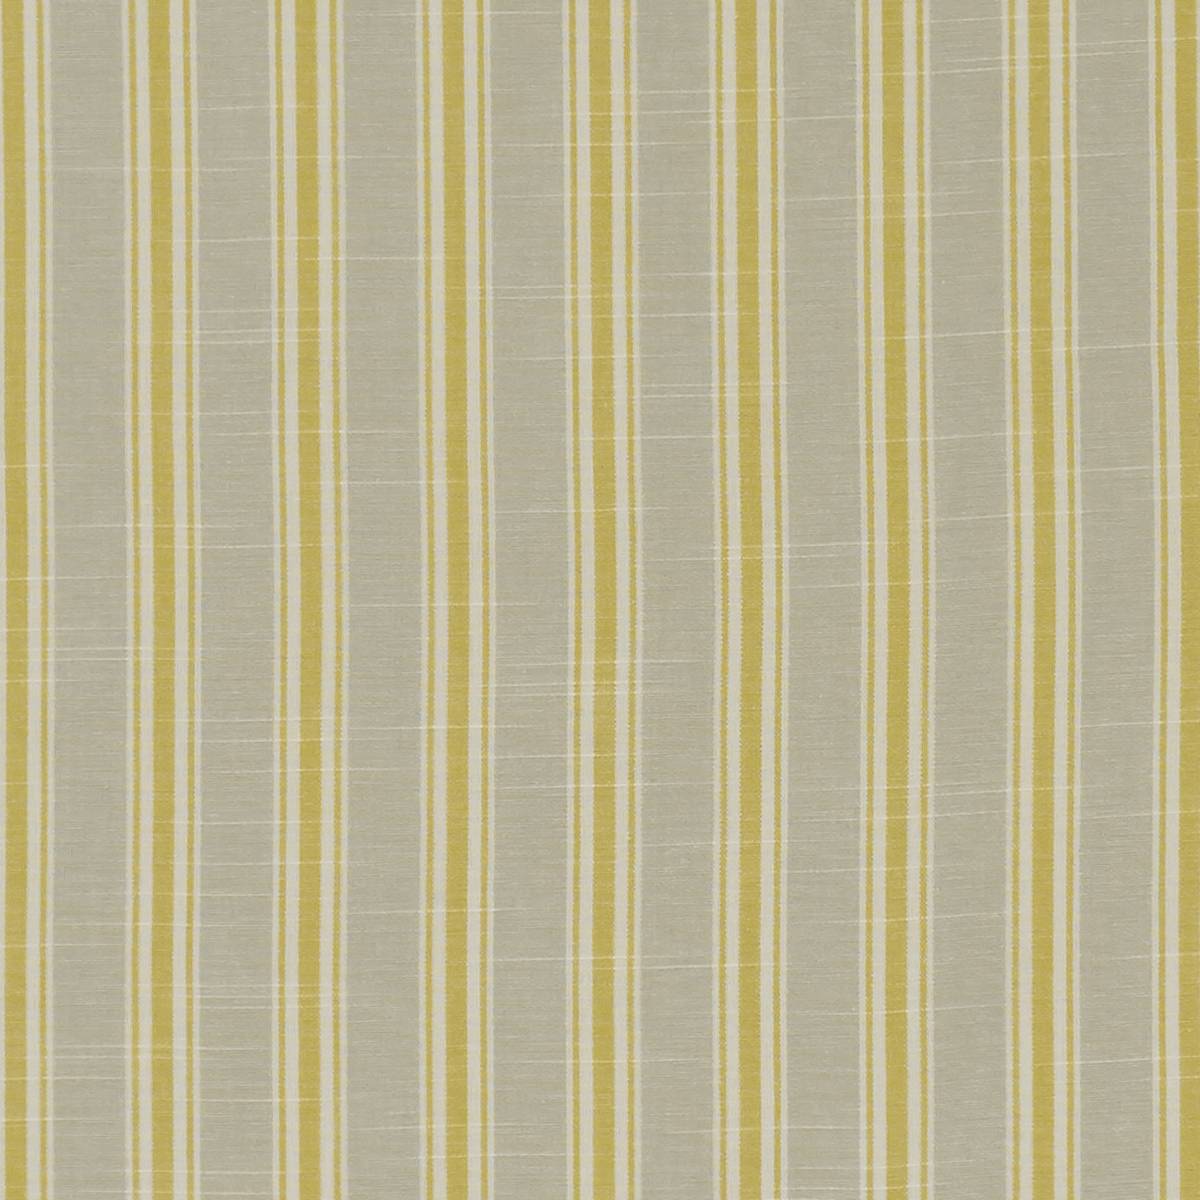 Thornwick Citrus Fabric by Studio G